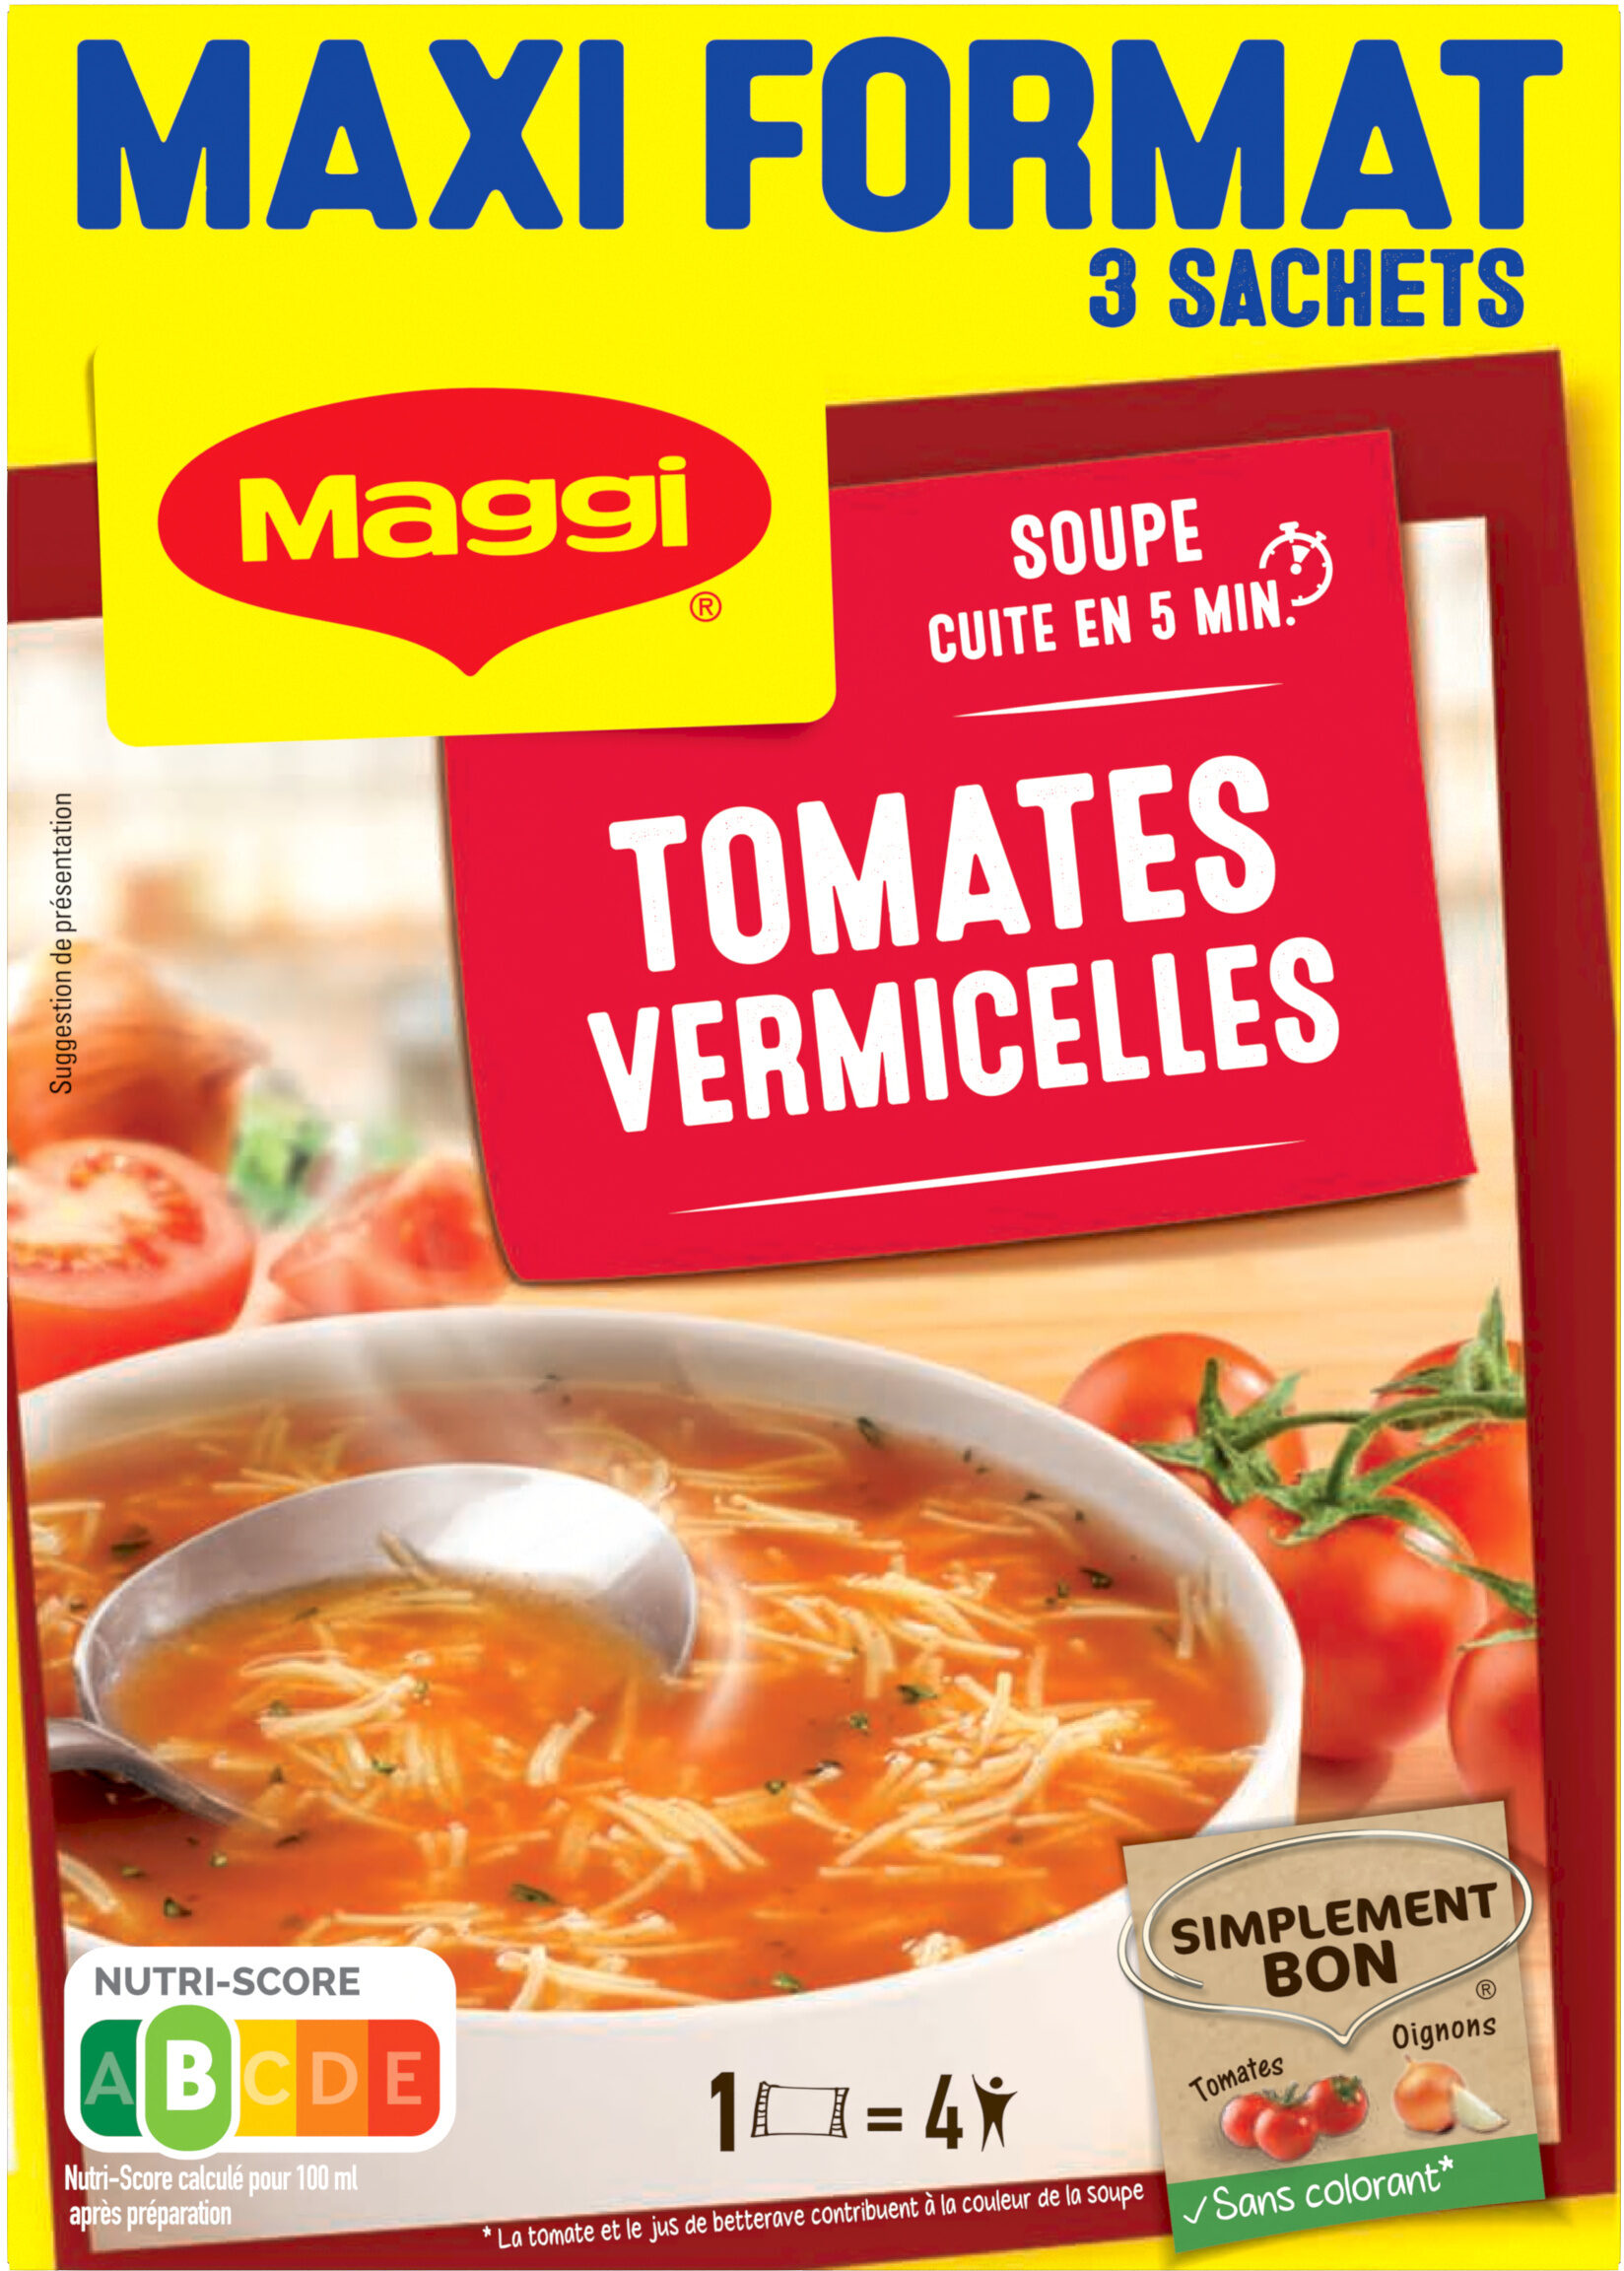 Soupe Tomates Vermicelles Maggi MAXI FORMAT 3 SACHETS - Product - fr